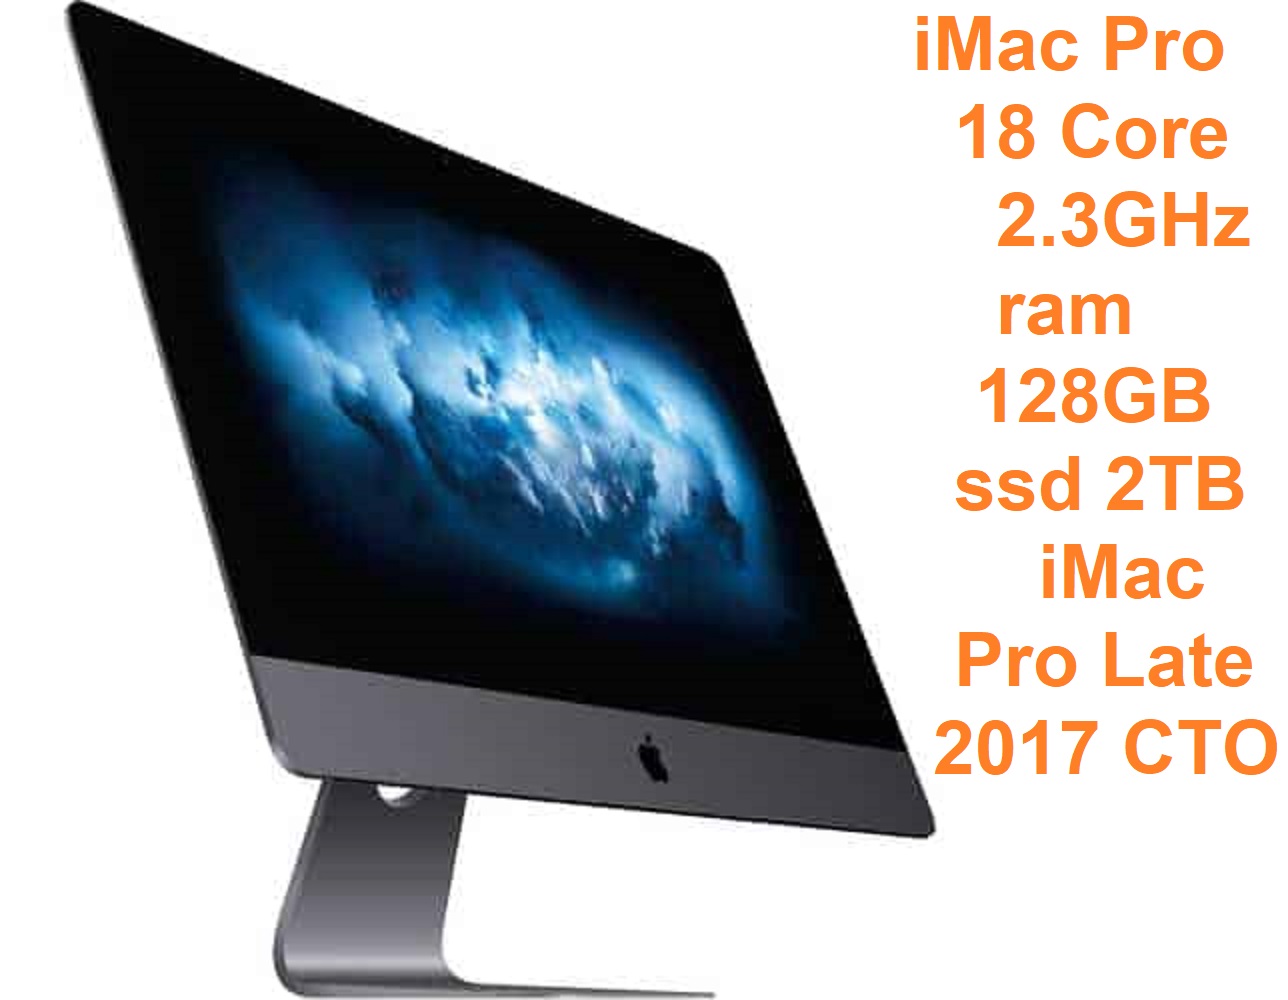 iMac Pro 18 Core 2.3GHz ram 128GB ssd 2TB iMac Pro Late 2017 CTO.